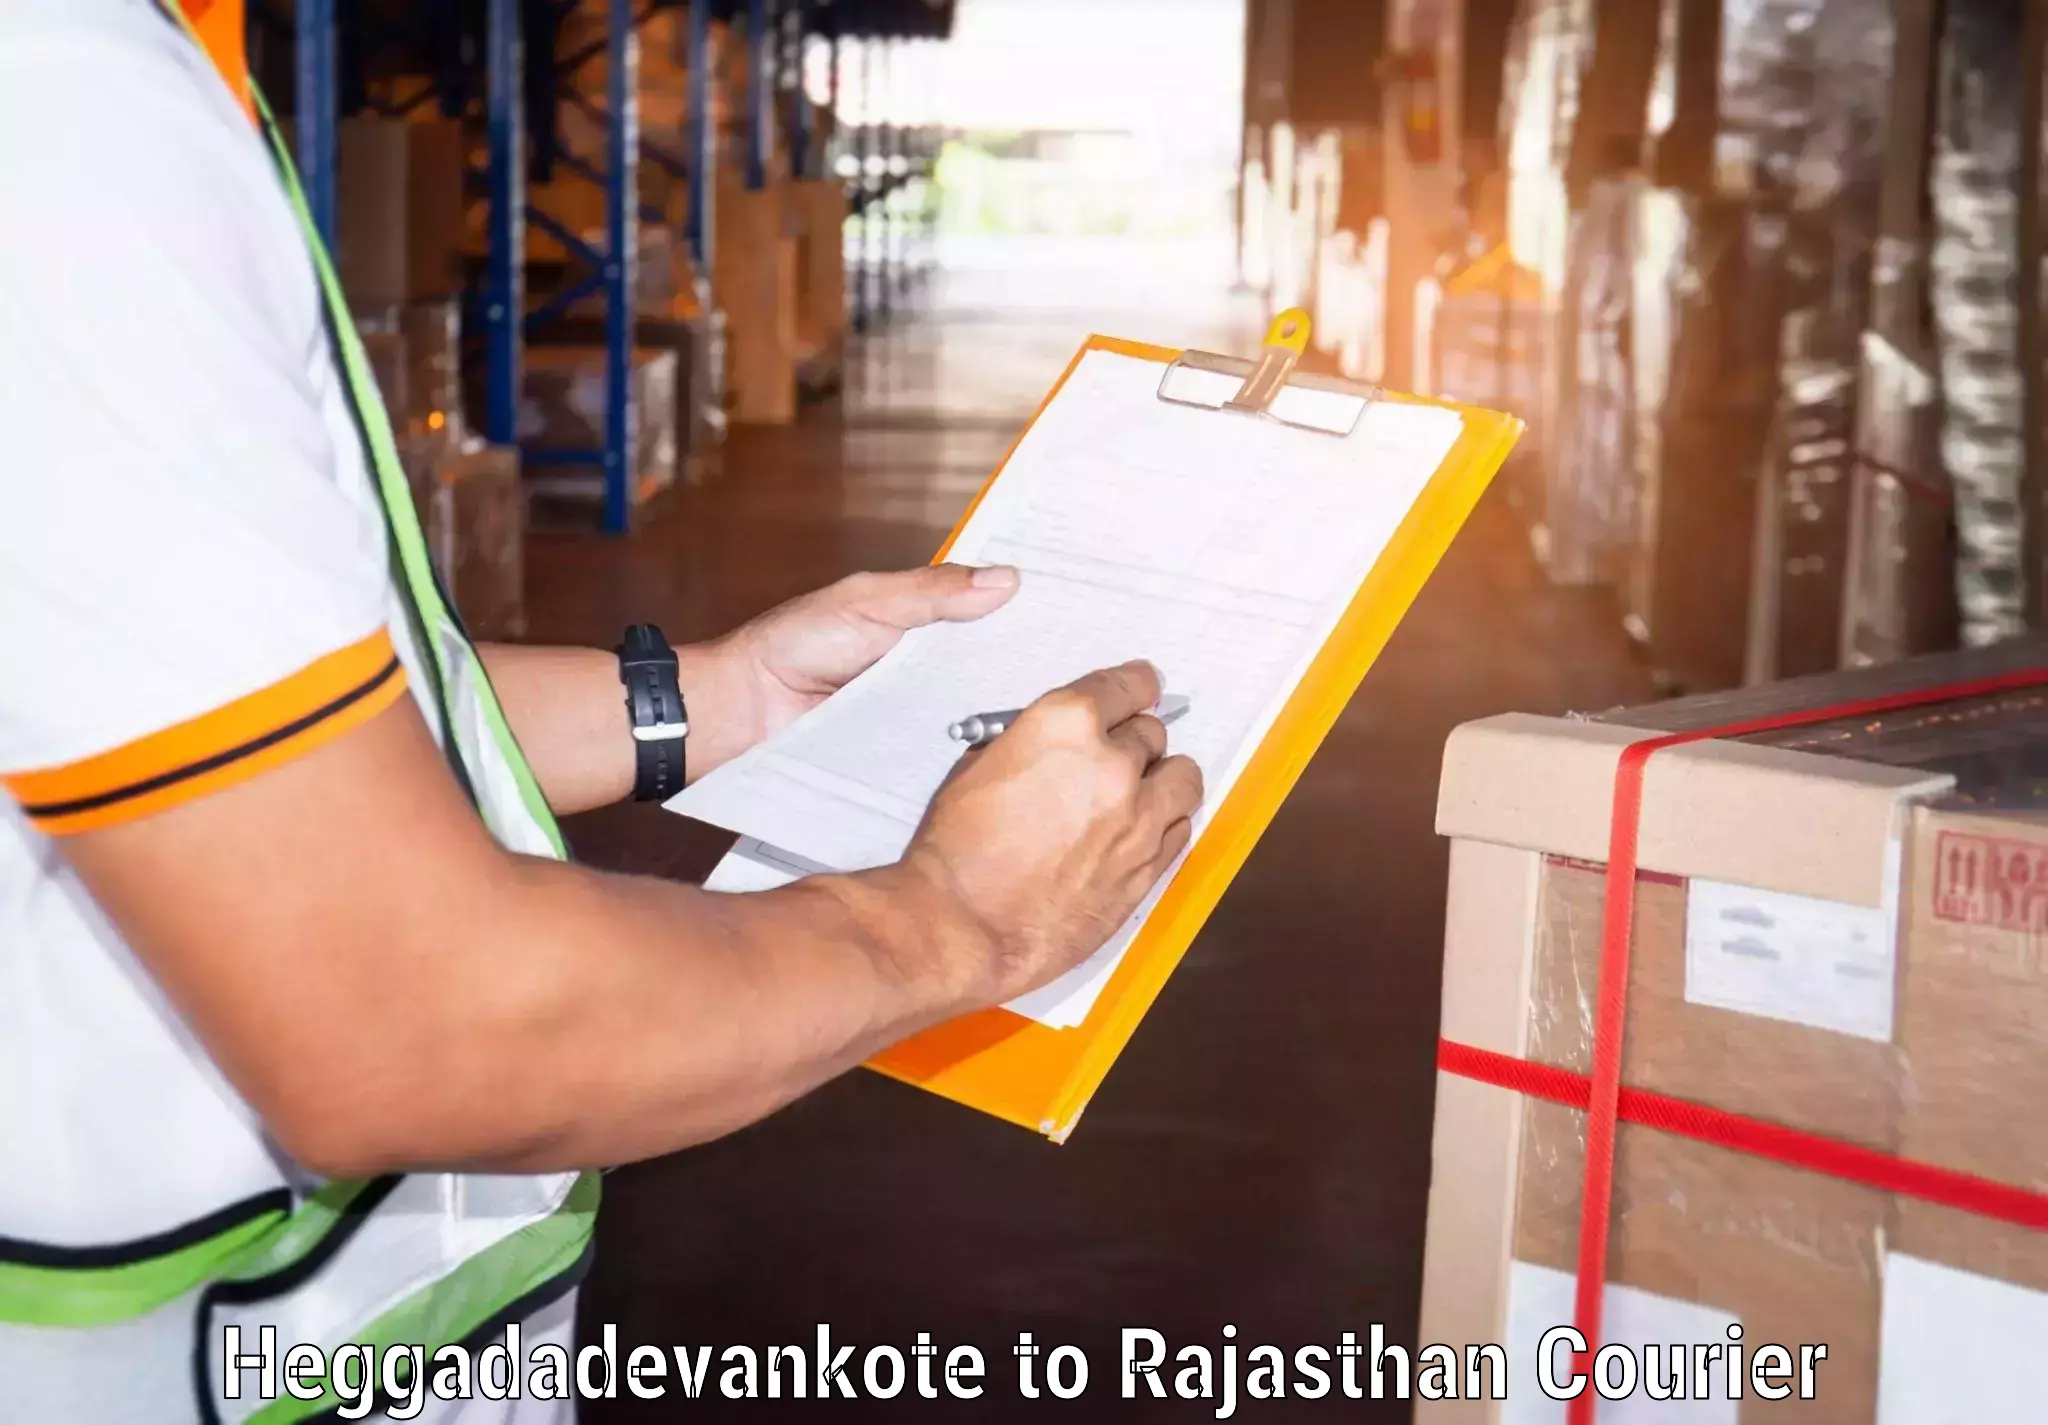 Logistics service provider Heggadadevankote to Asind